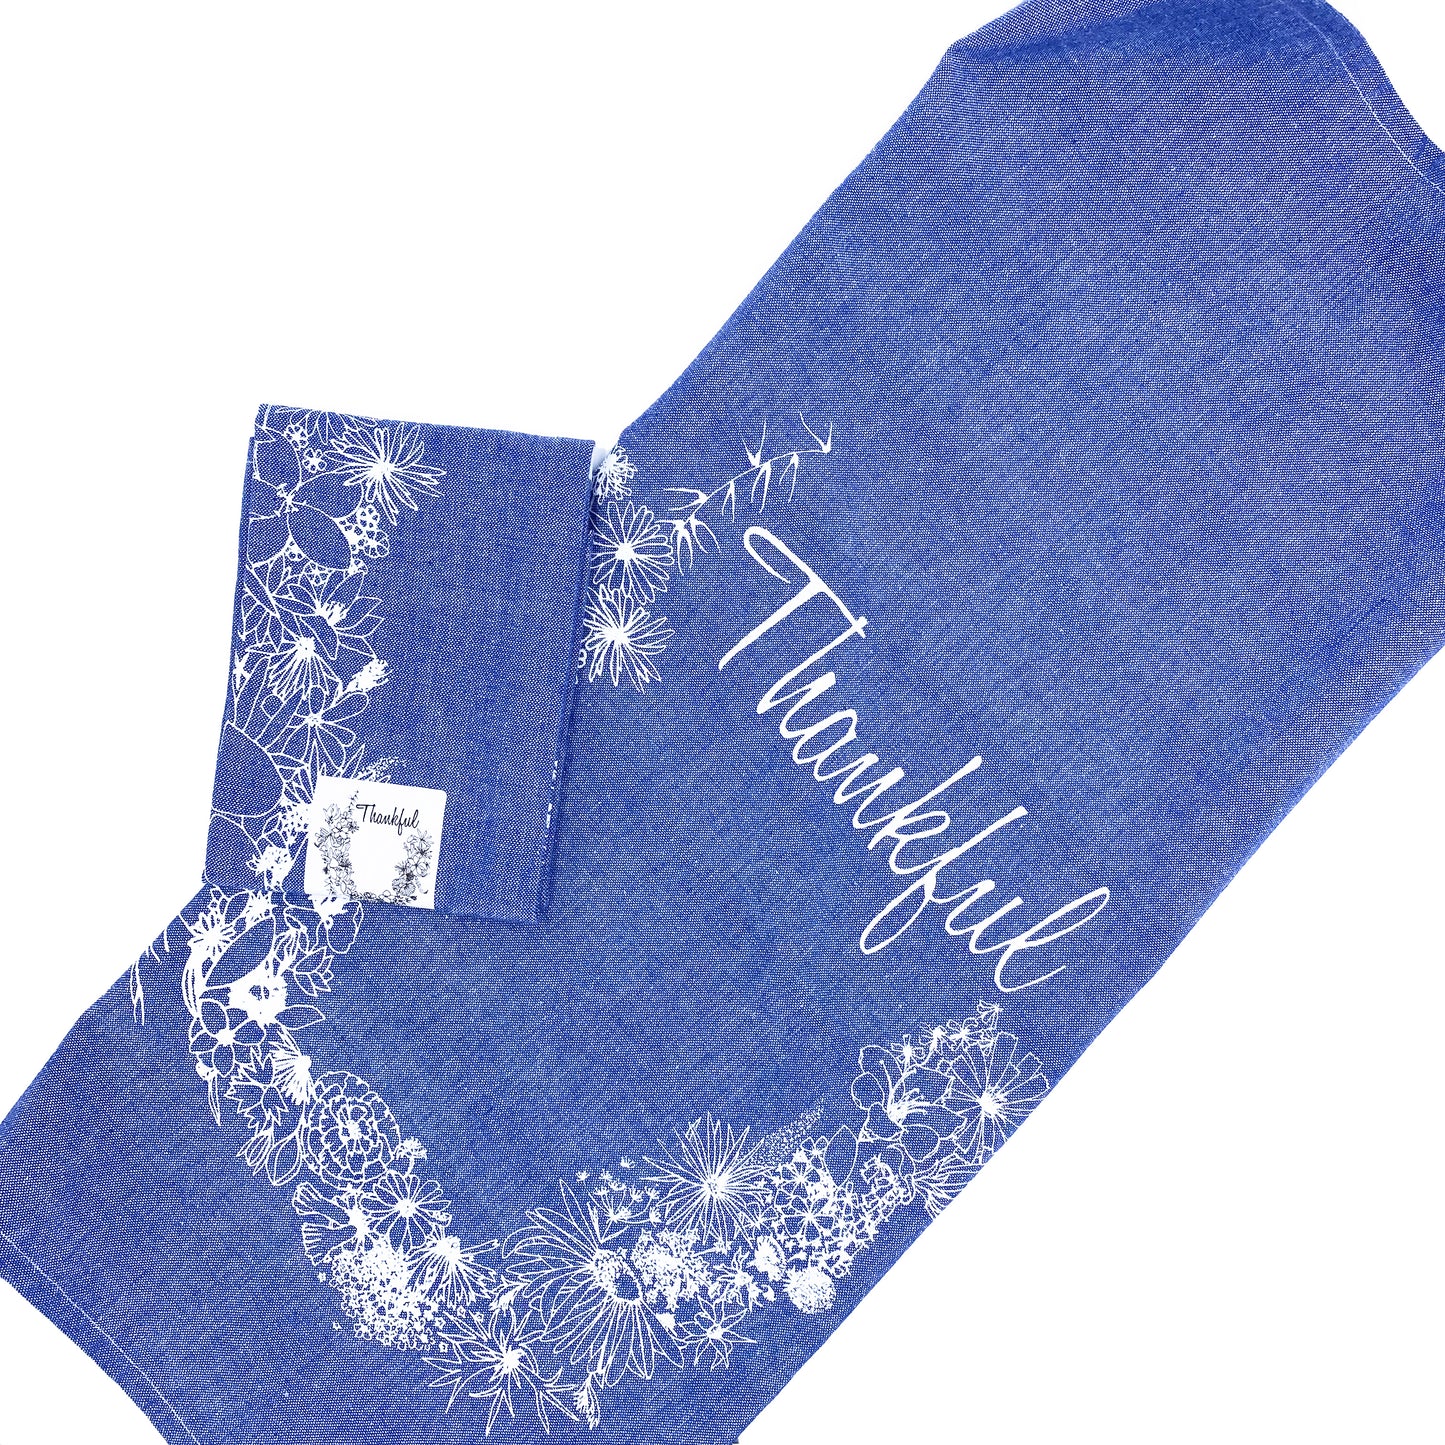 THANKFUL Handprinted Artisan Tea Towel